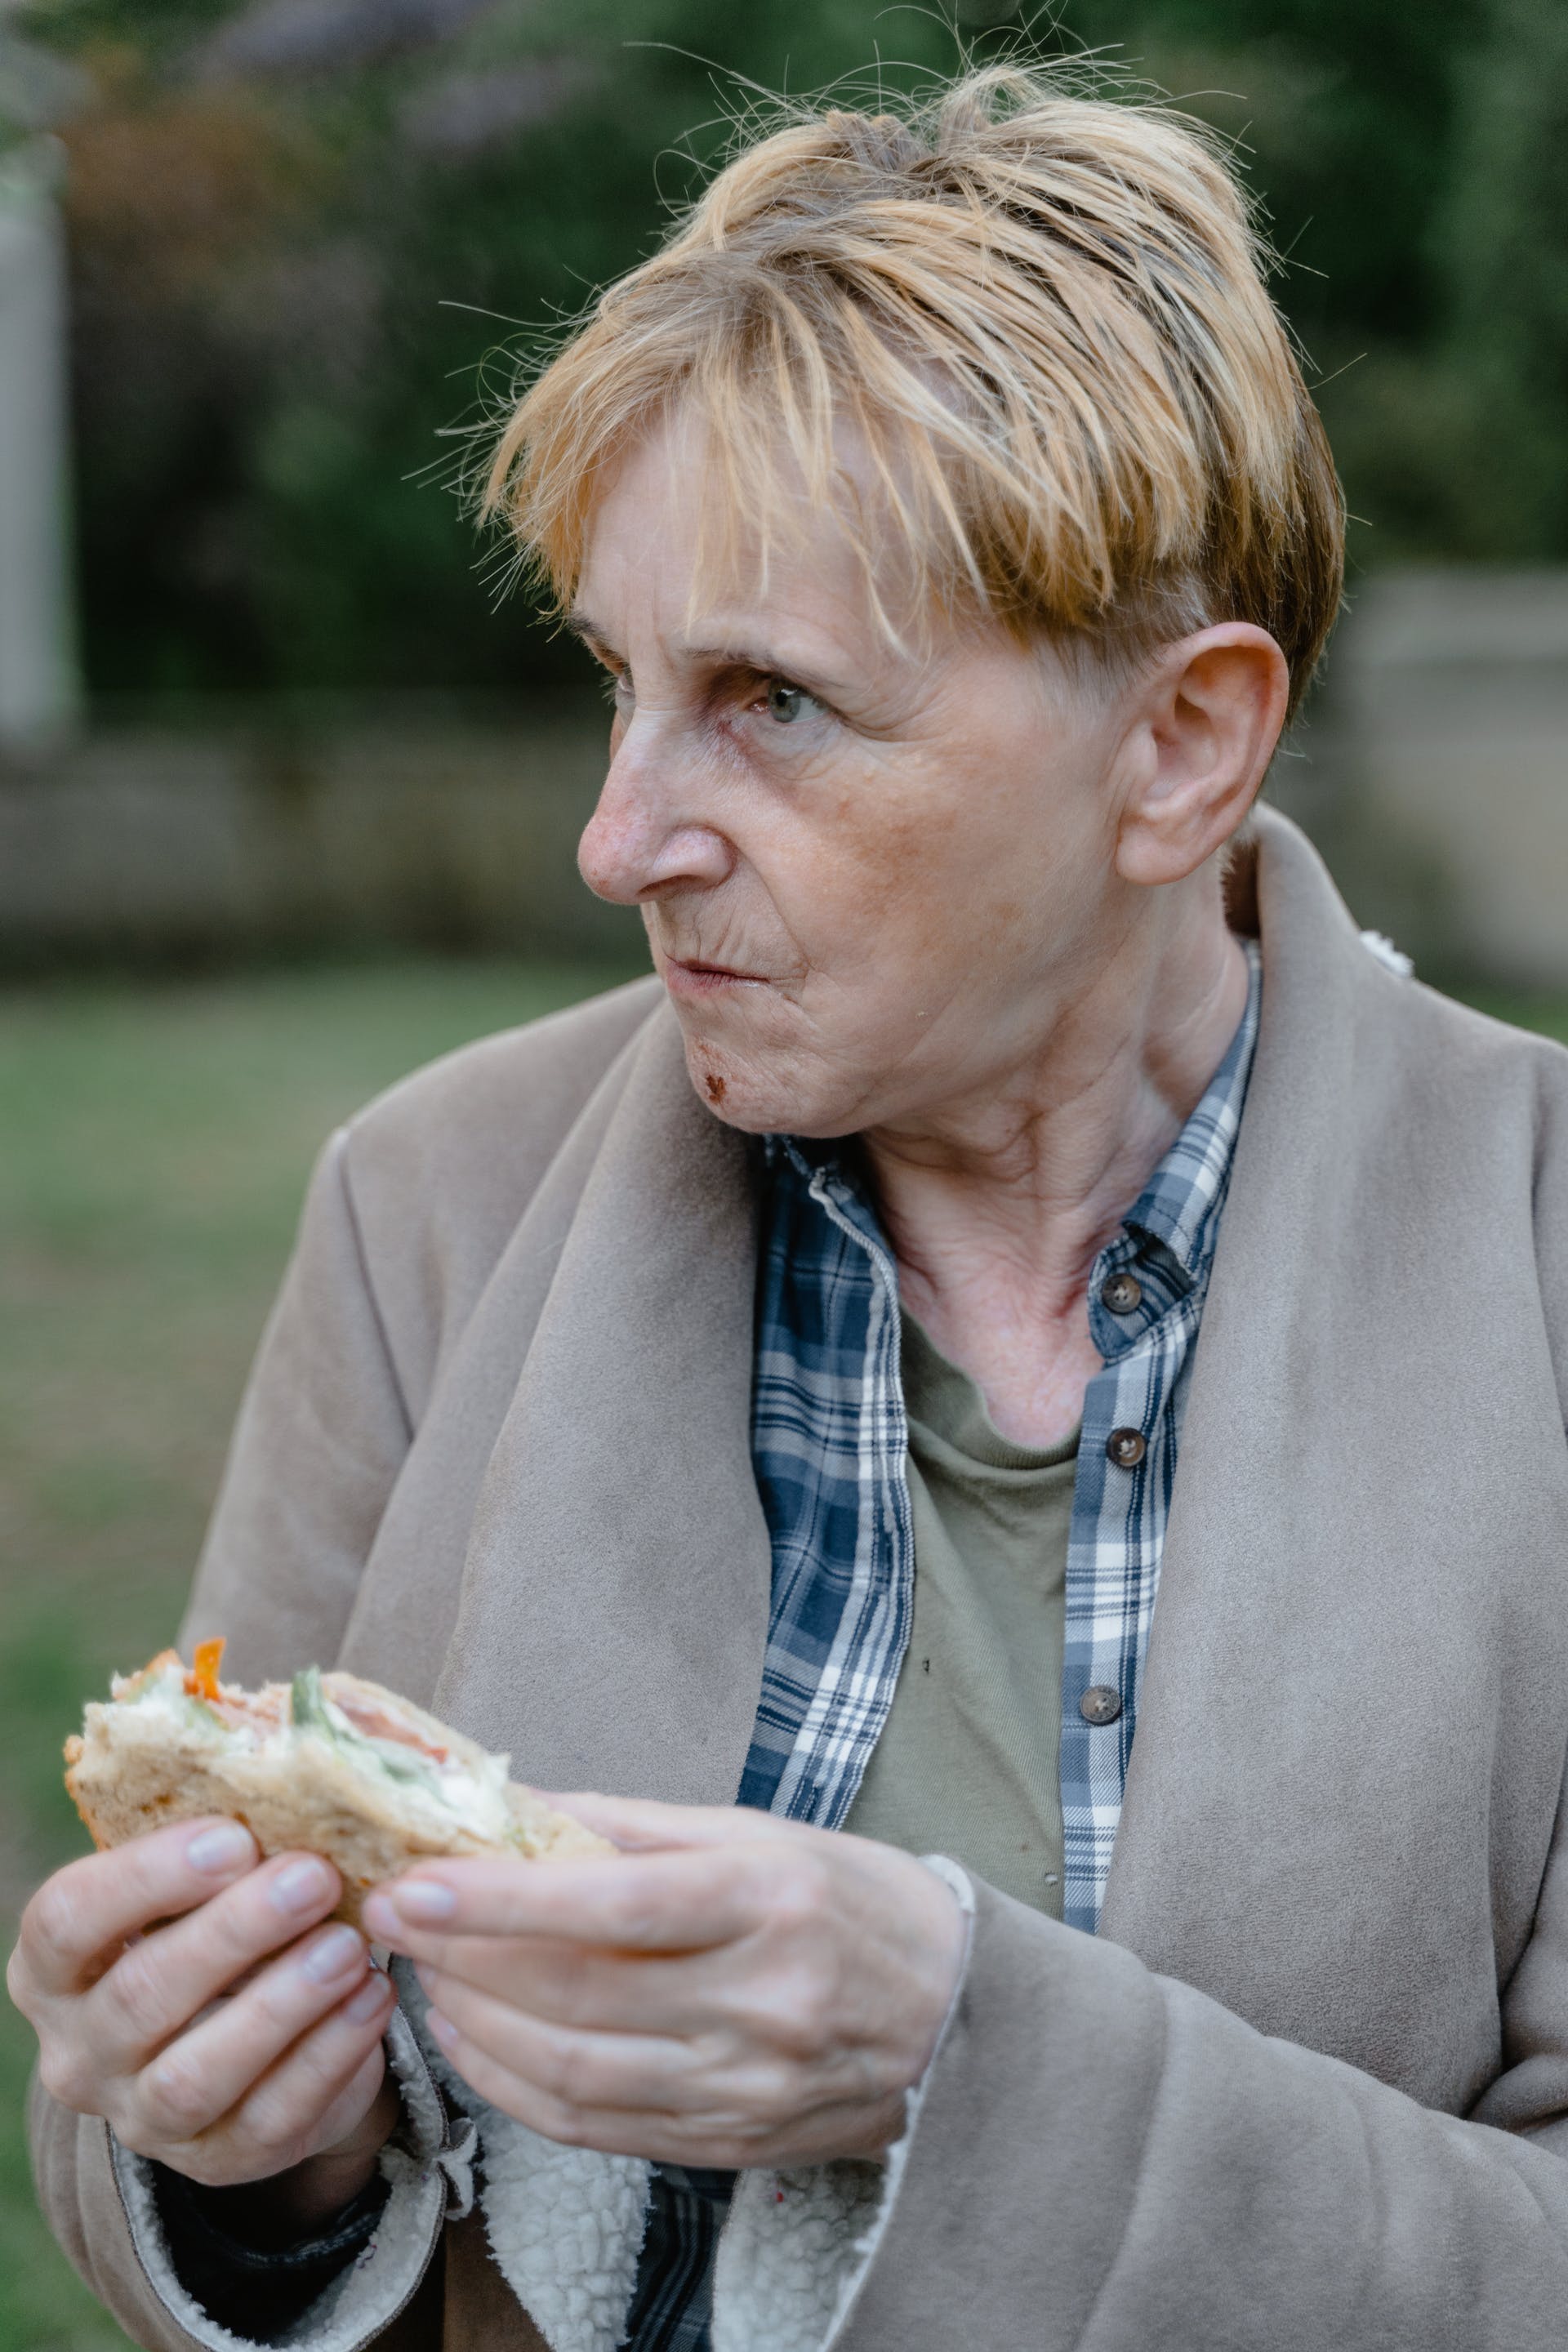 An older woman holding a sandwich | Source: Pexels